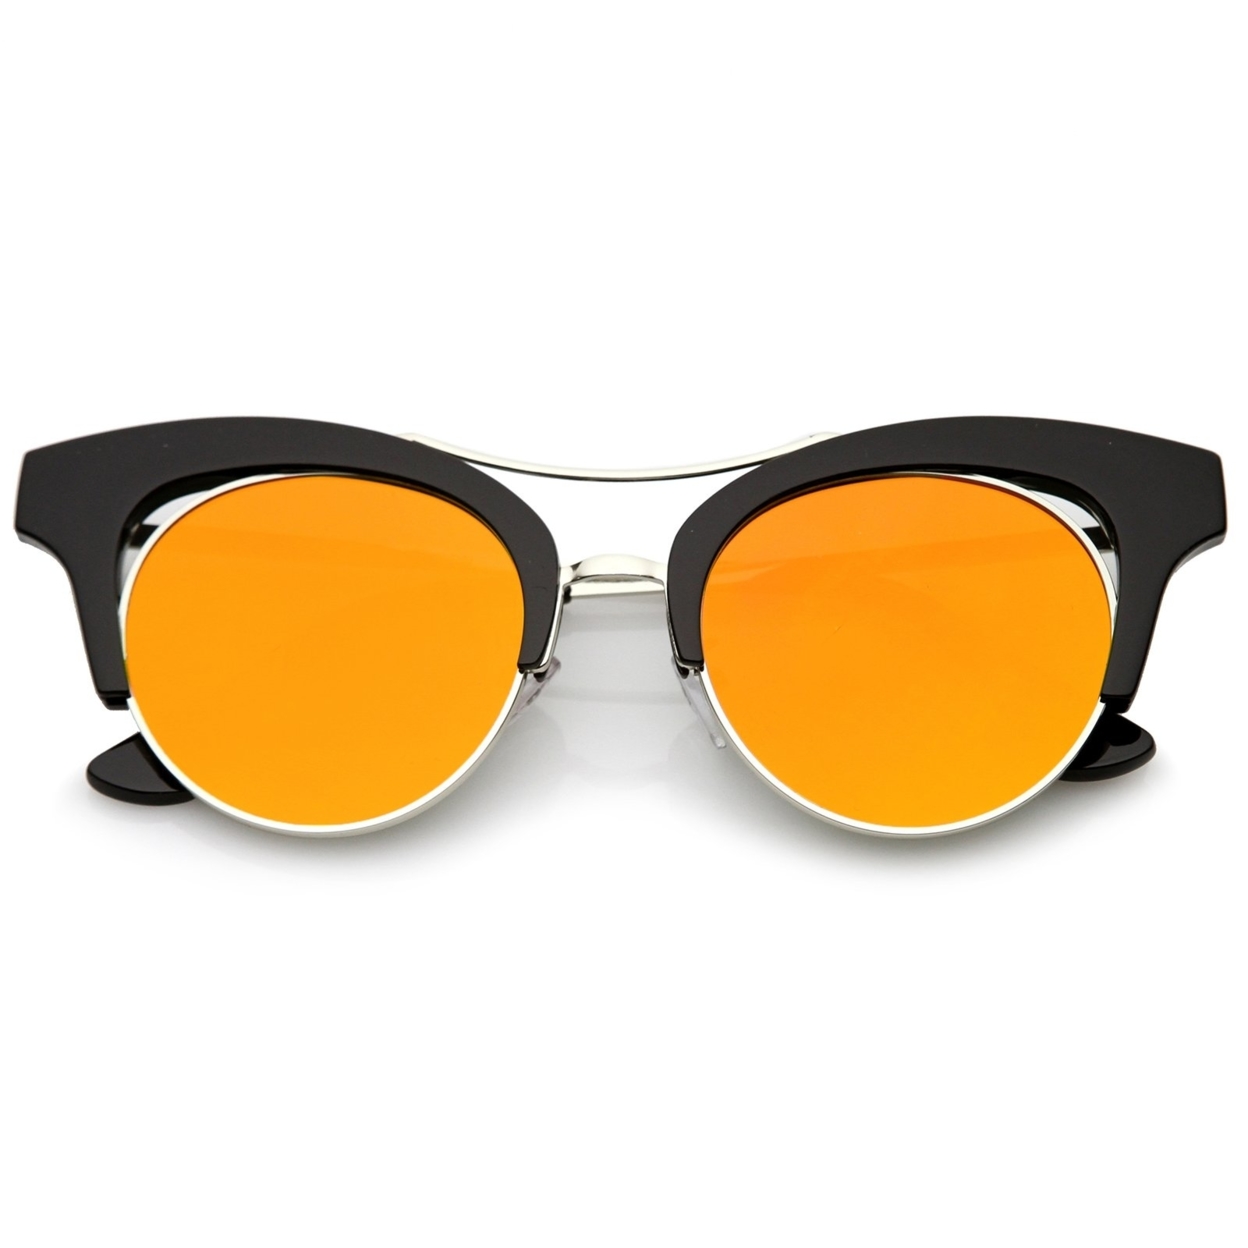 Women's Oversize Cutout Brow Bar Mirror Round Flat Lens Cat Eye Sunglasses 51mm - White-Gold / Blue Mirror